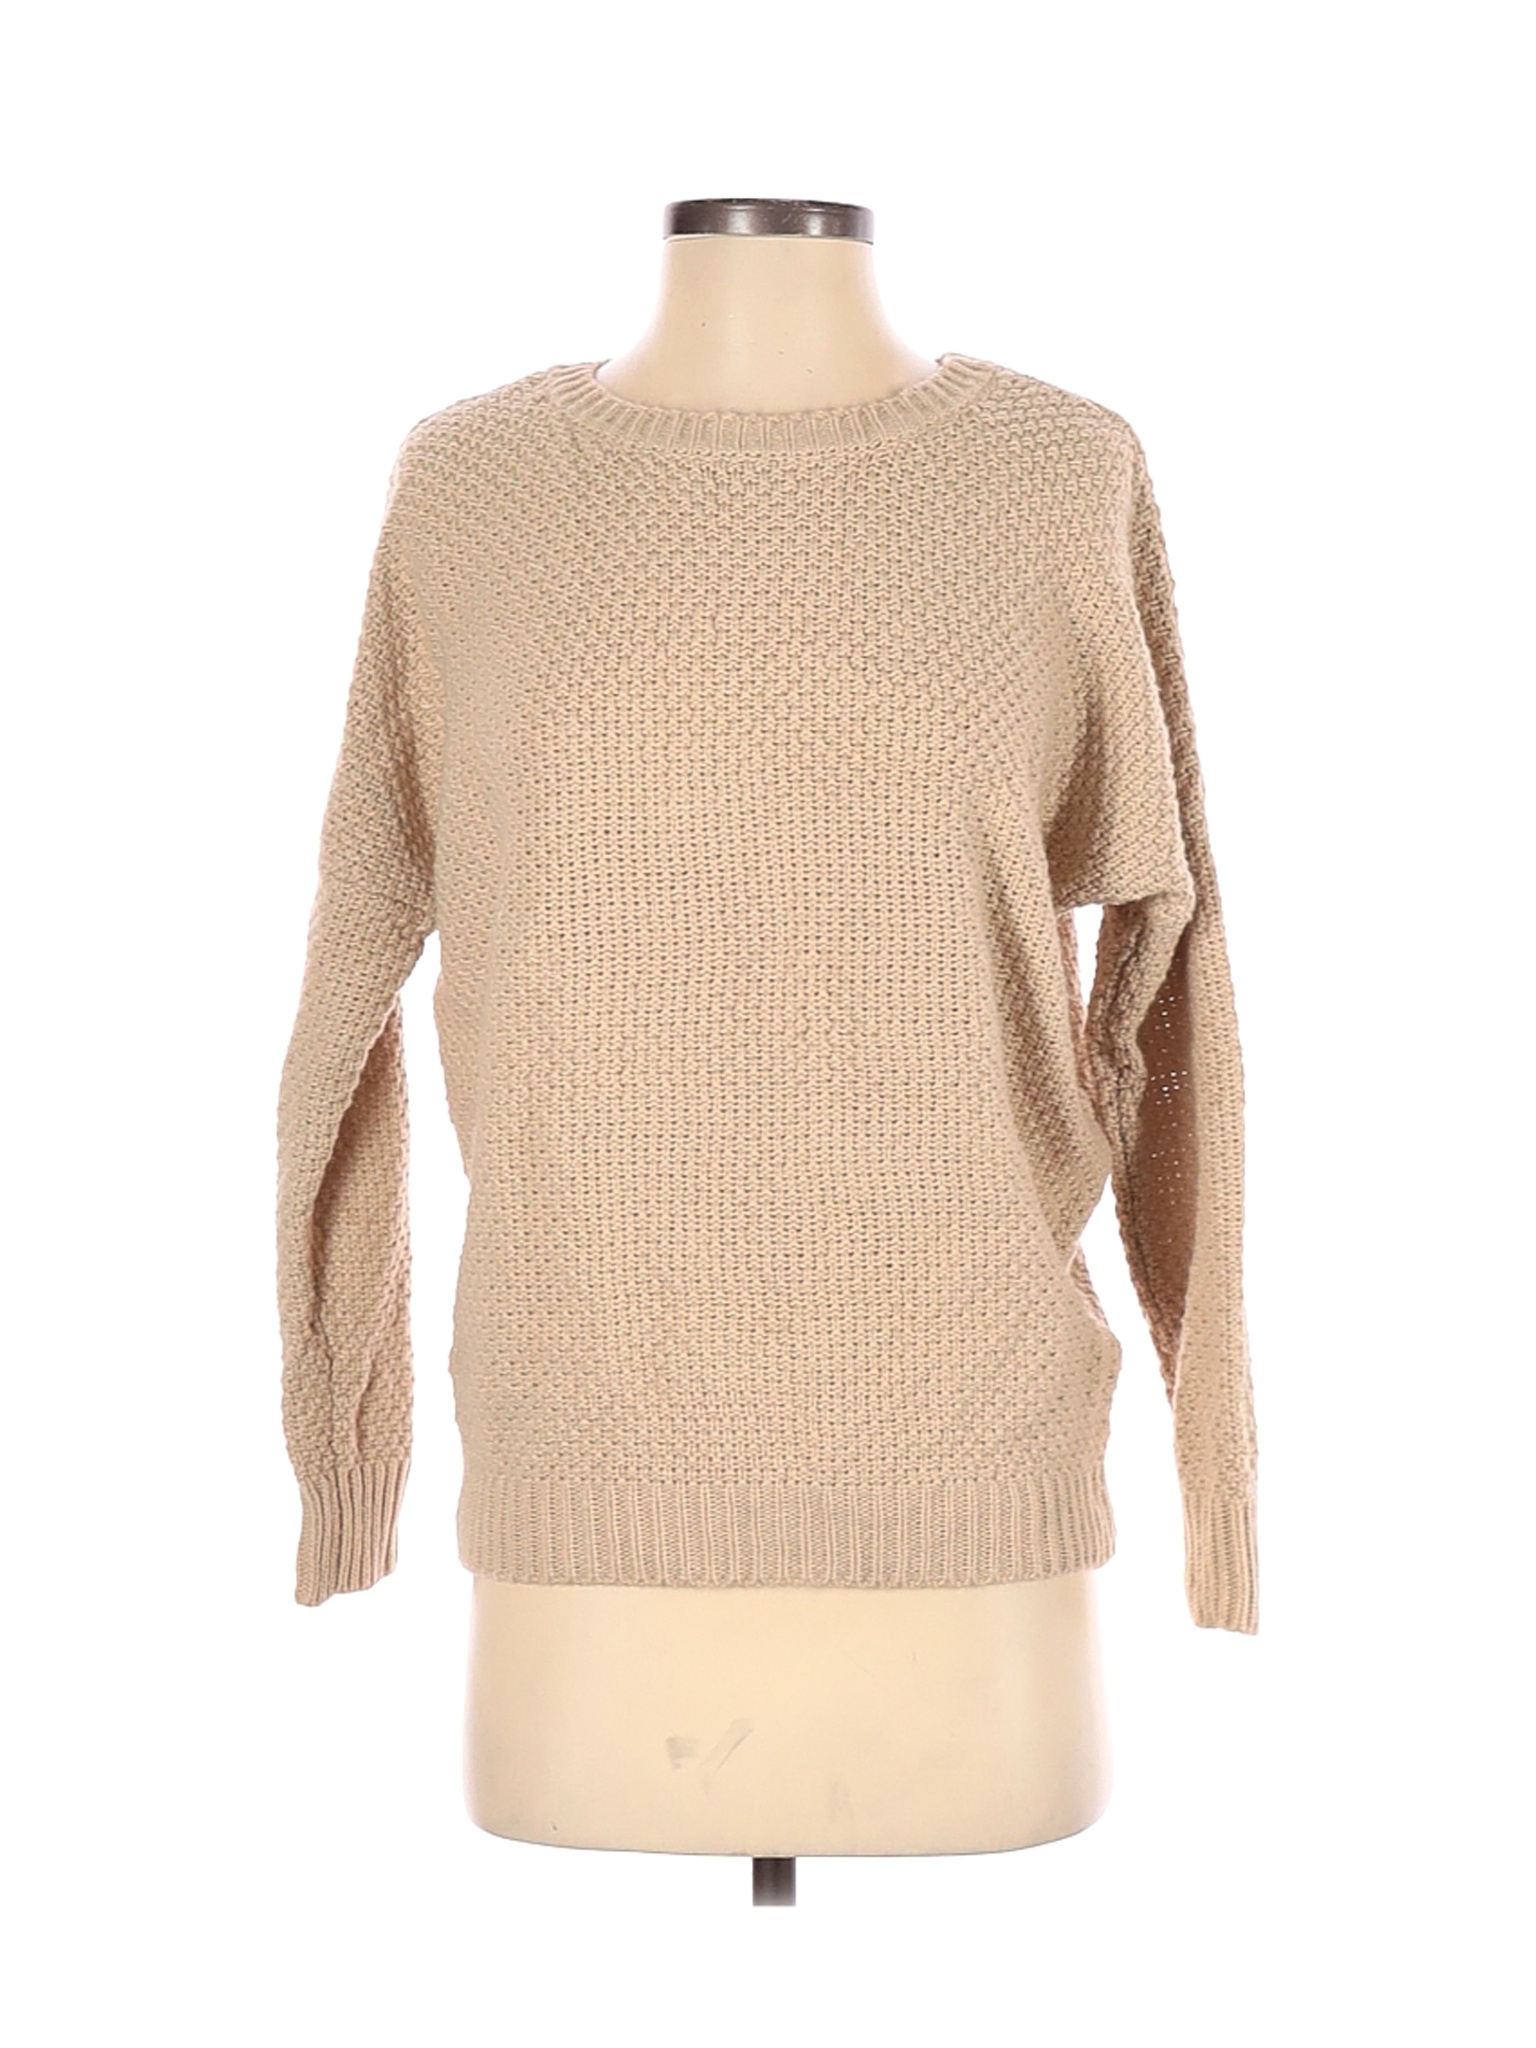 Mak Sweaters Women Brown Pullover Sweater S | eBay